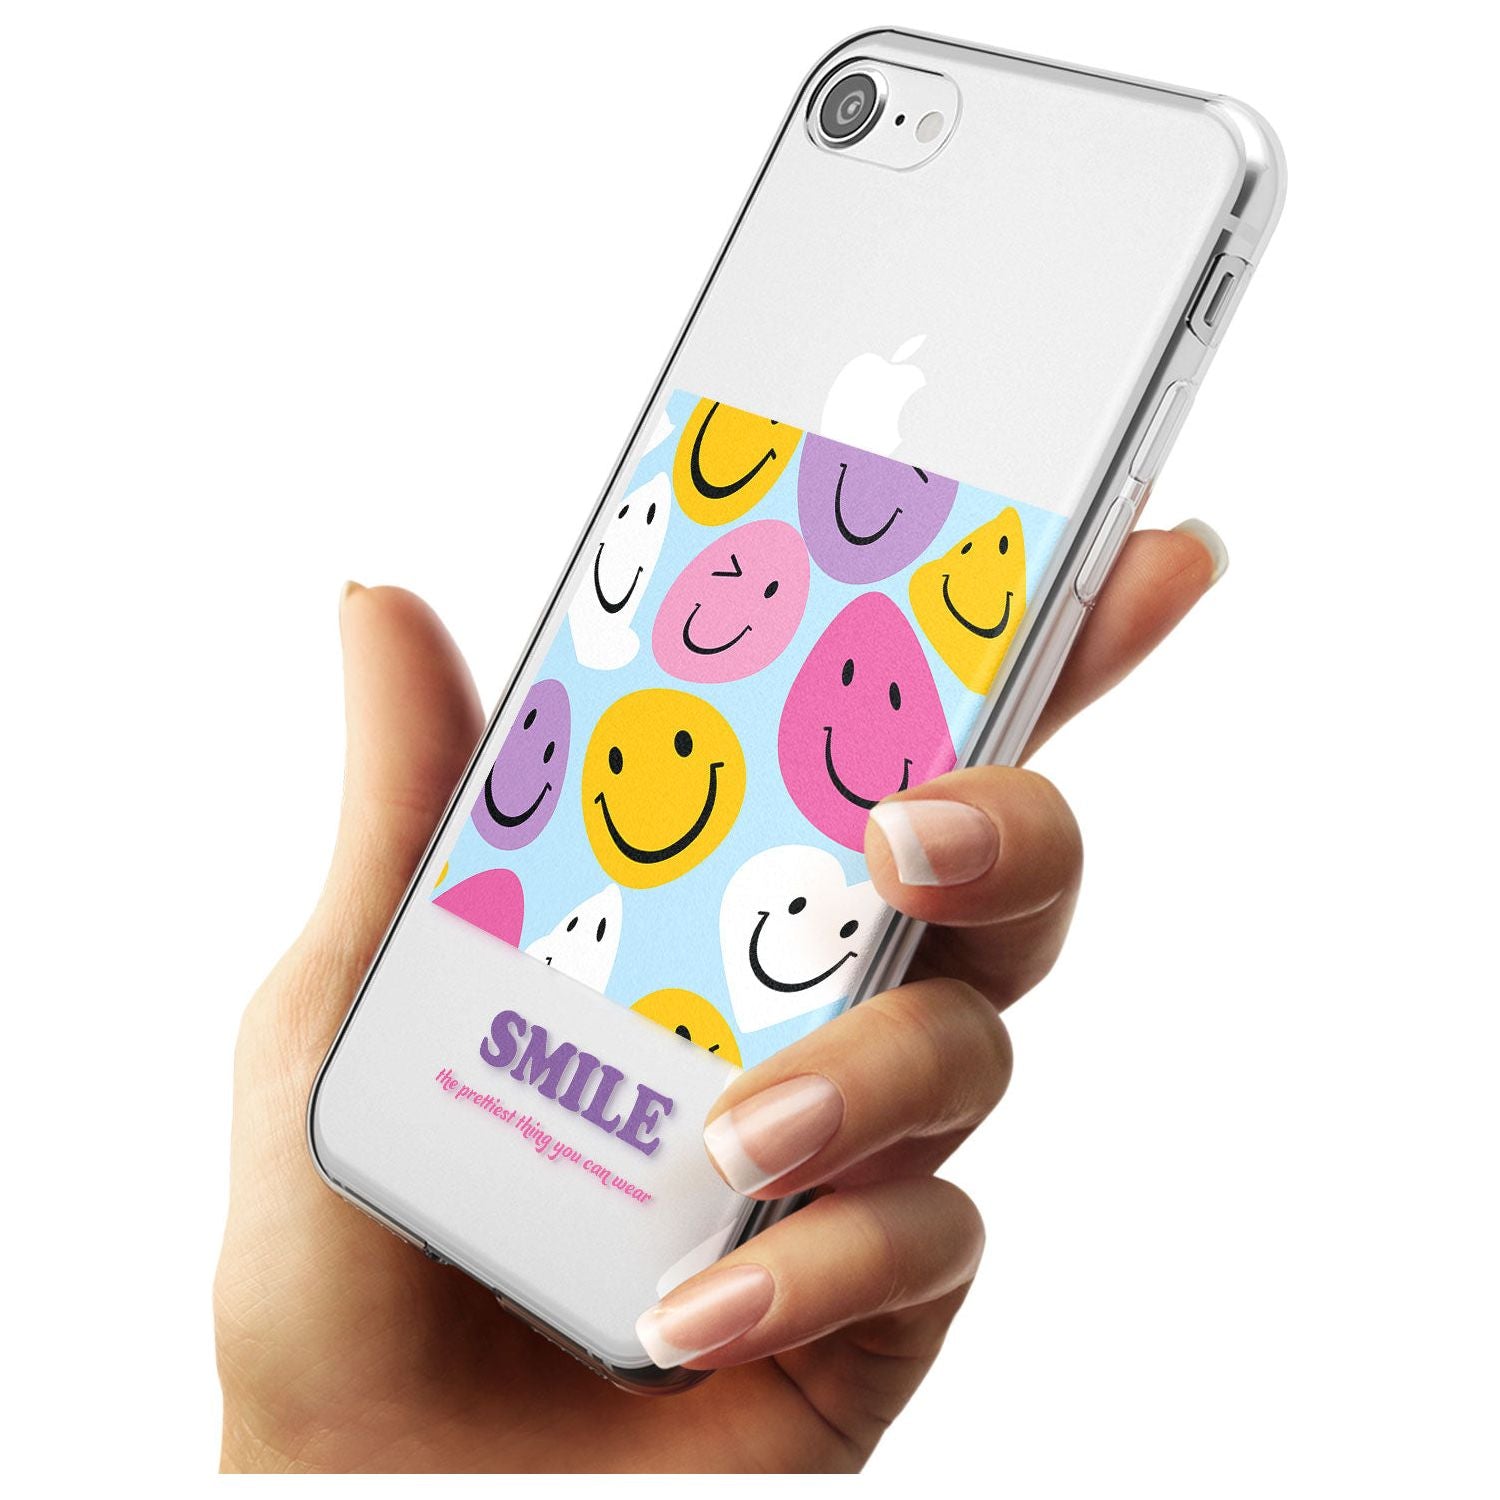 A Smile Slim TPU Phone Case for iPhone SE 8 7 Plus